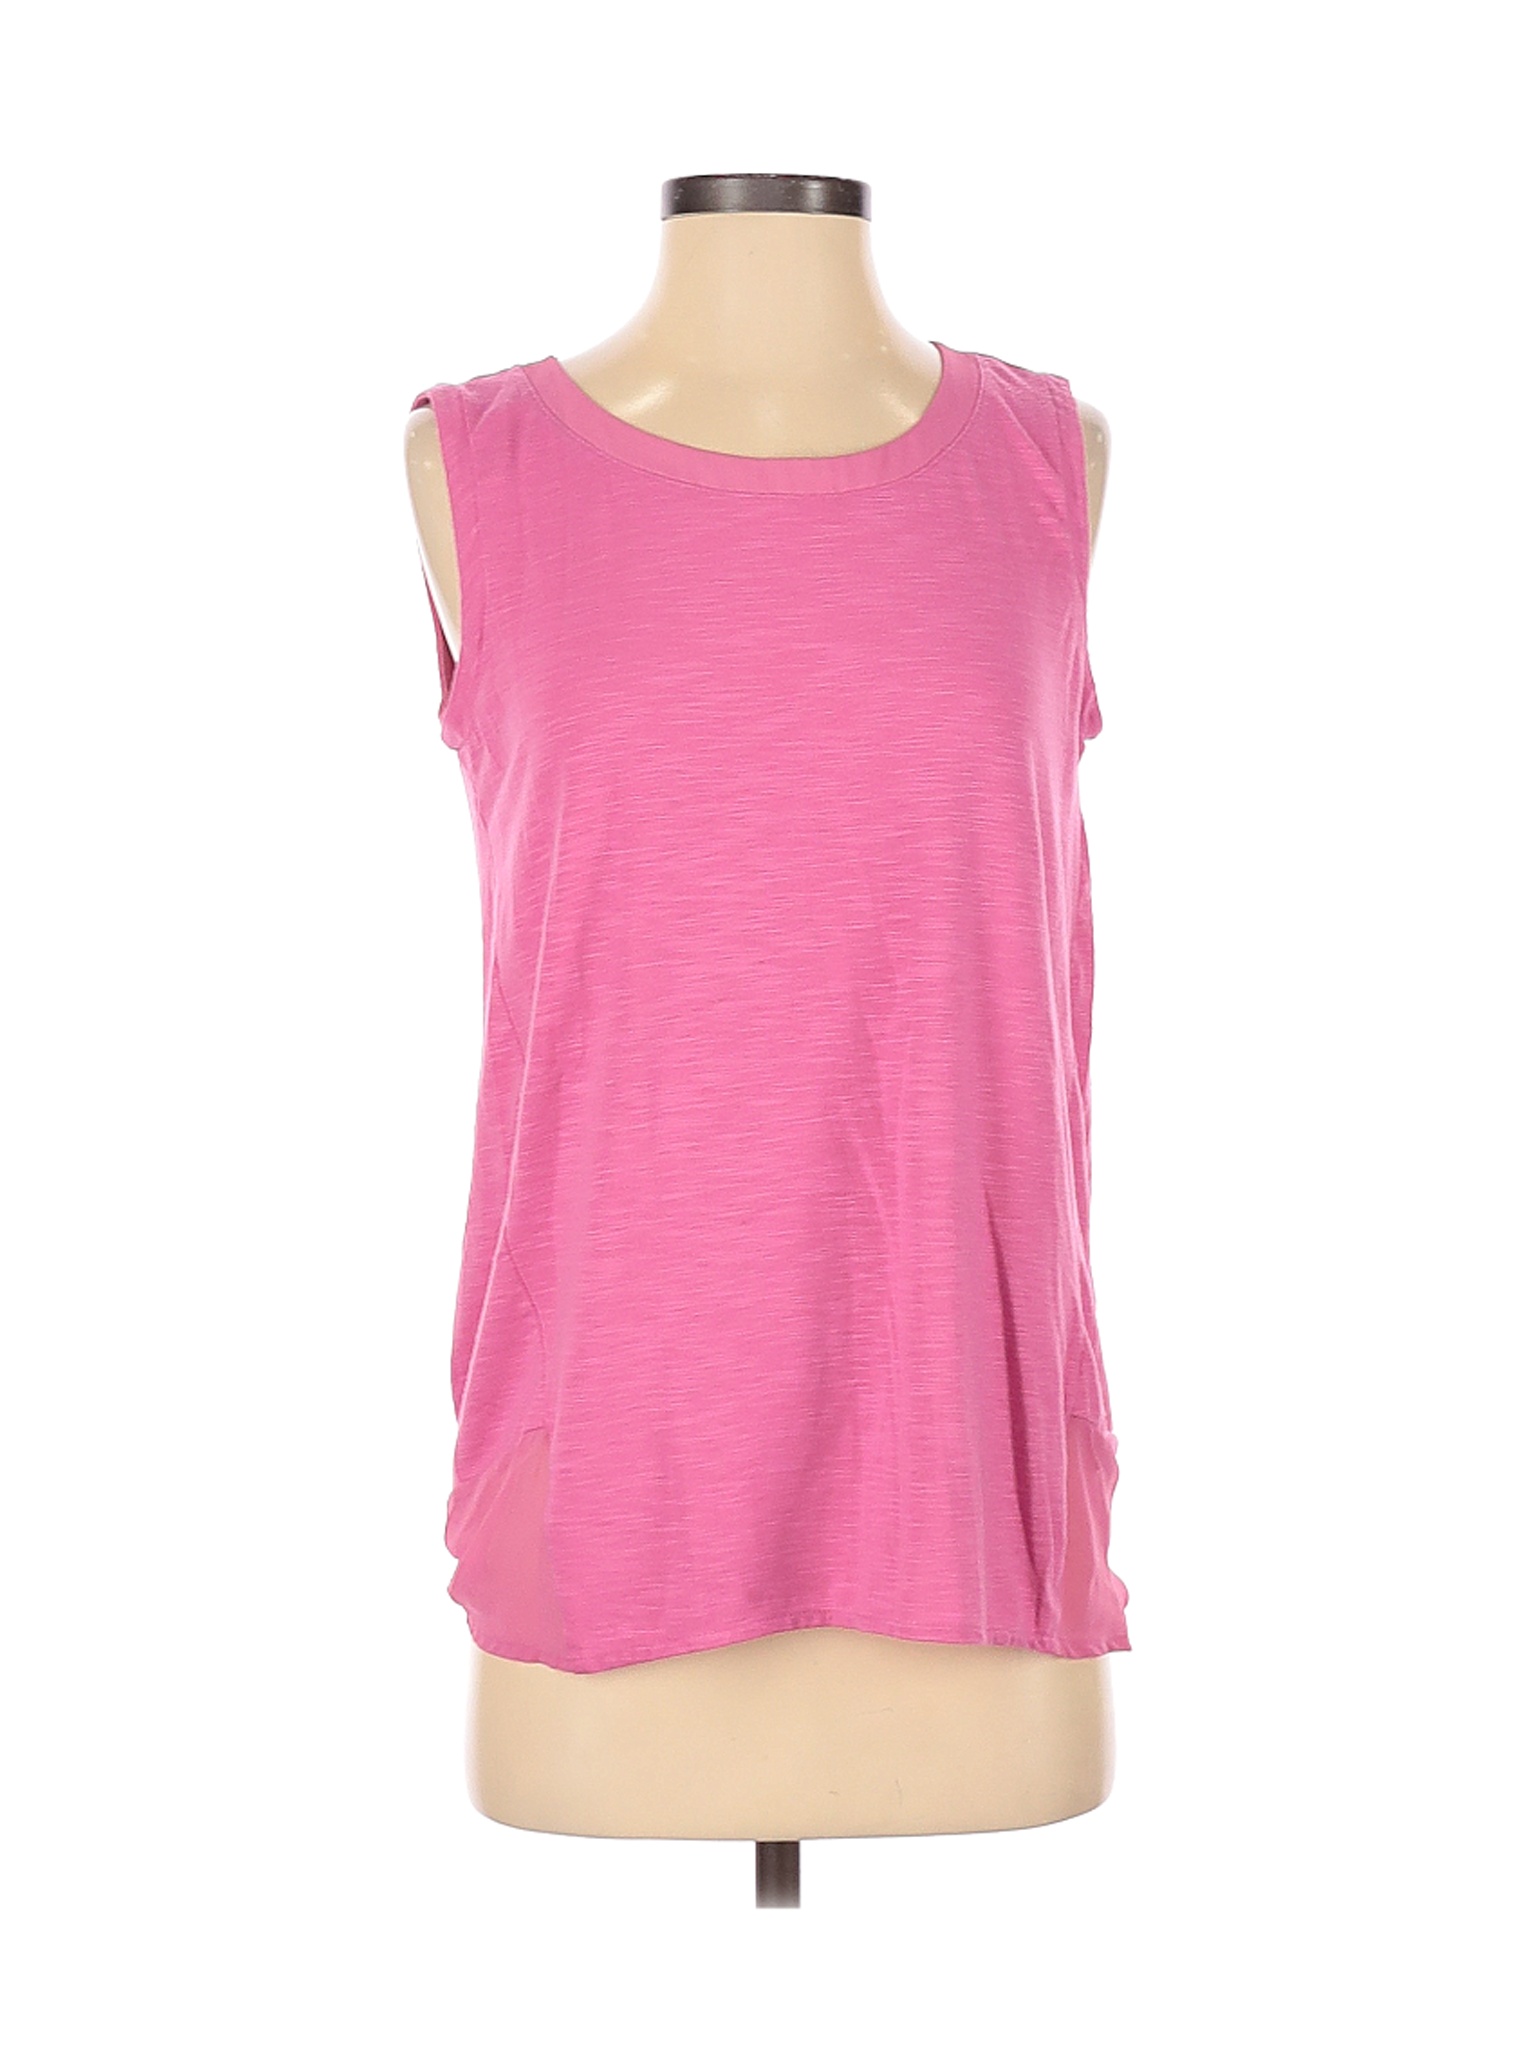 Adrienne Vittadini Women Pink Sleeveless Top S | eBay